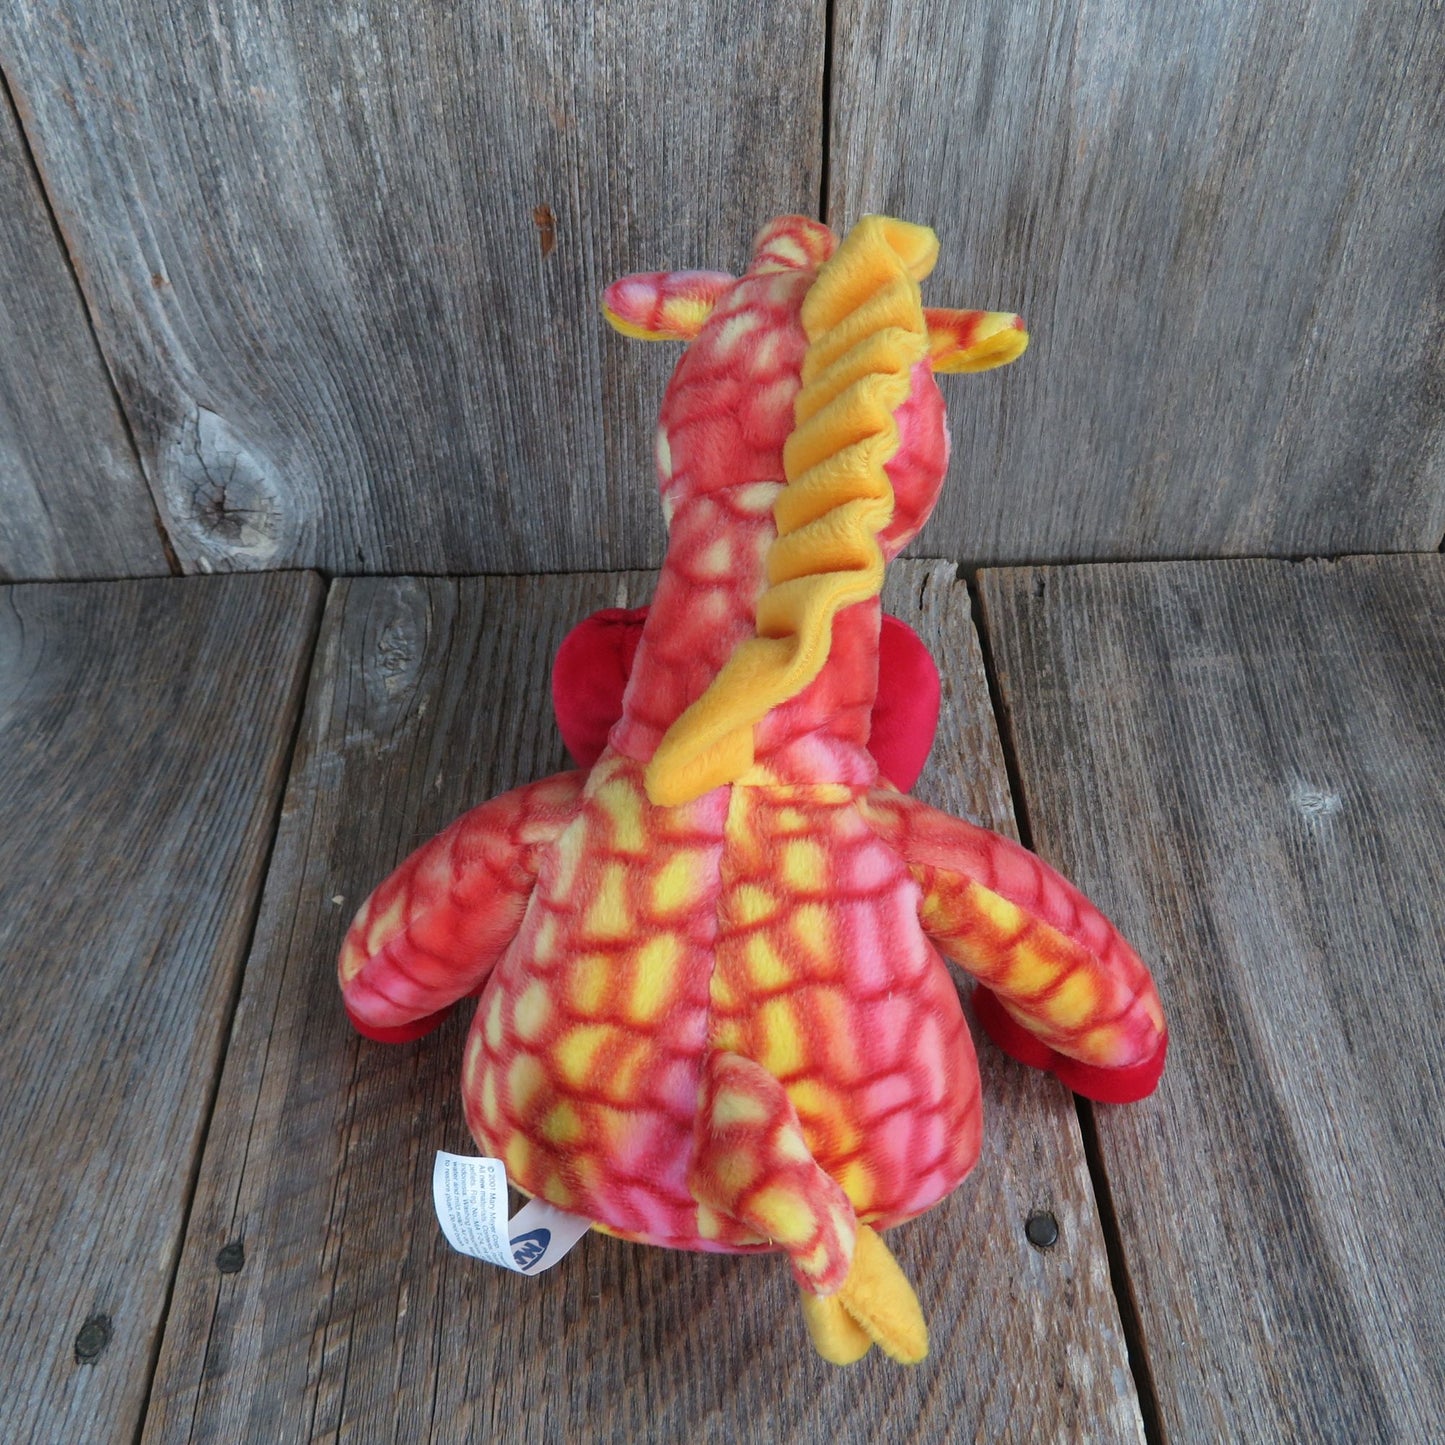 Vintage Giraffe Plush Weighted Red Orange Floppy Pink Mary Meyer Stuffed Animal 2001